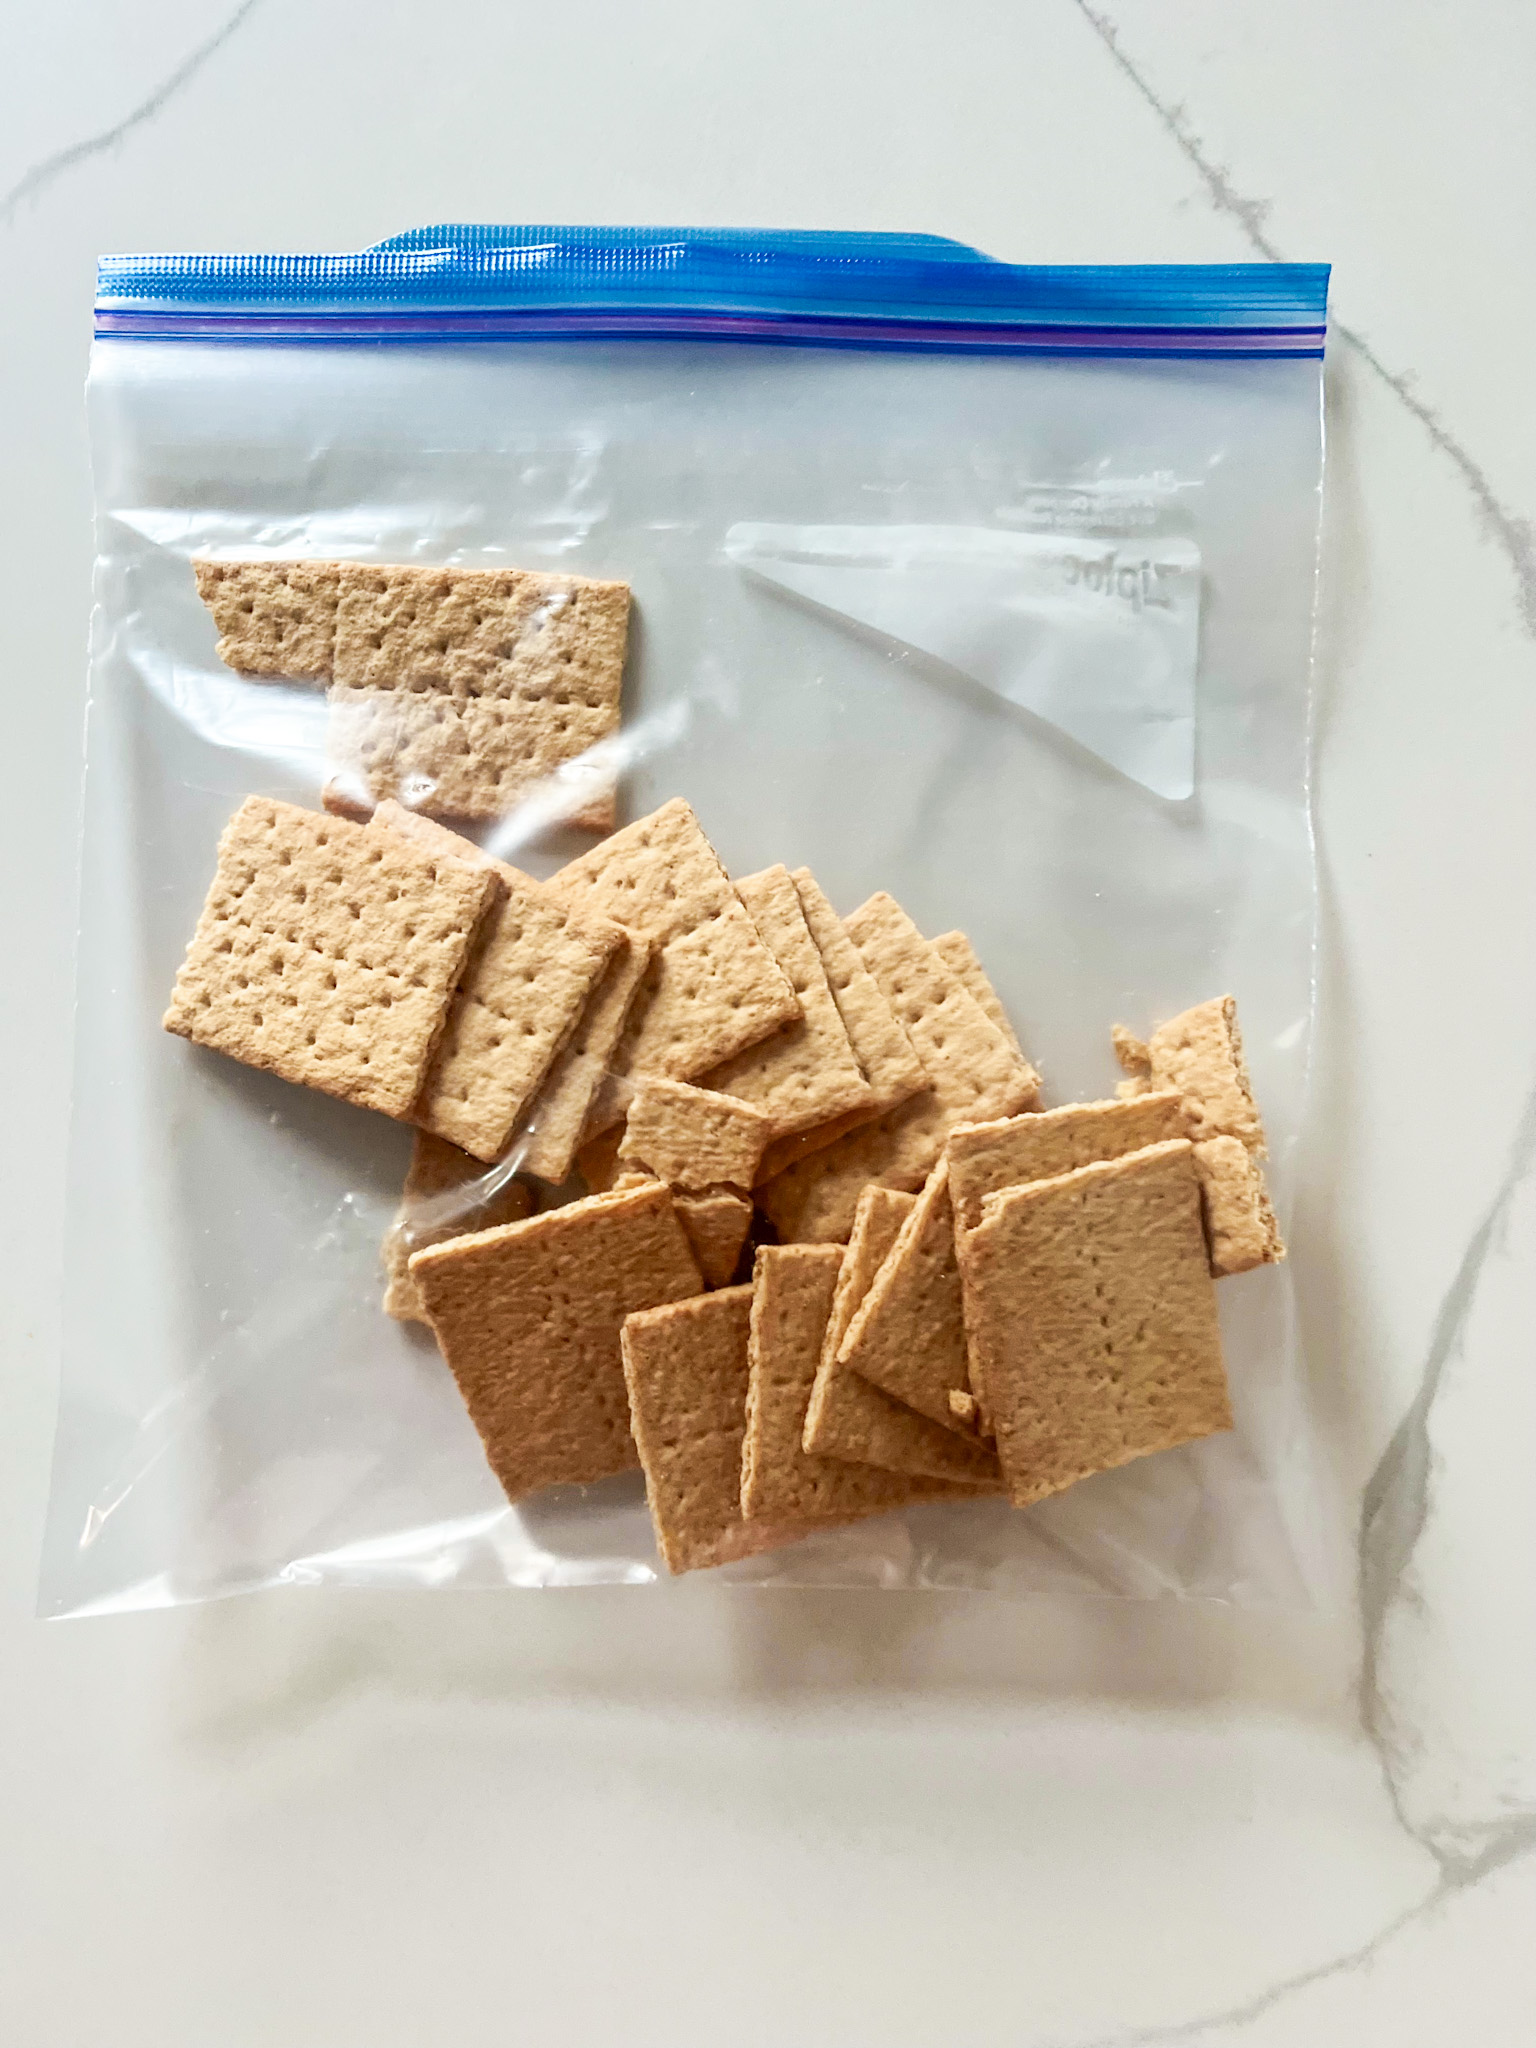 graham crackers in a plastic bag